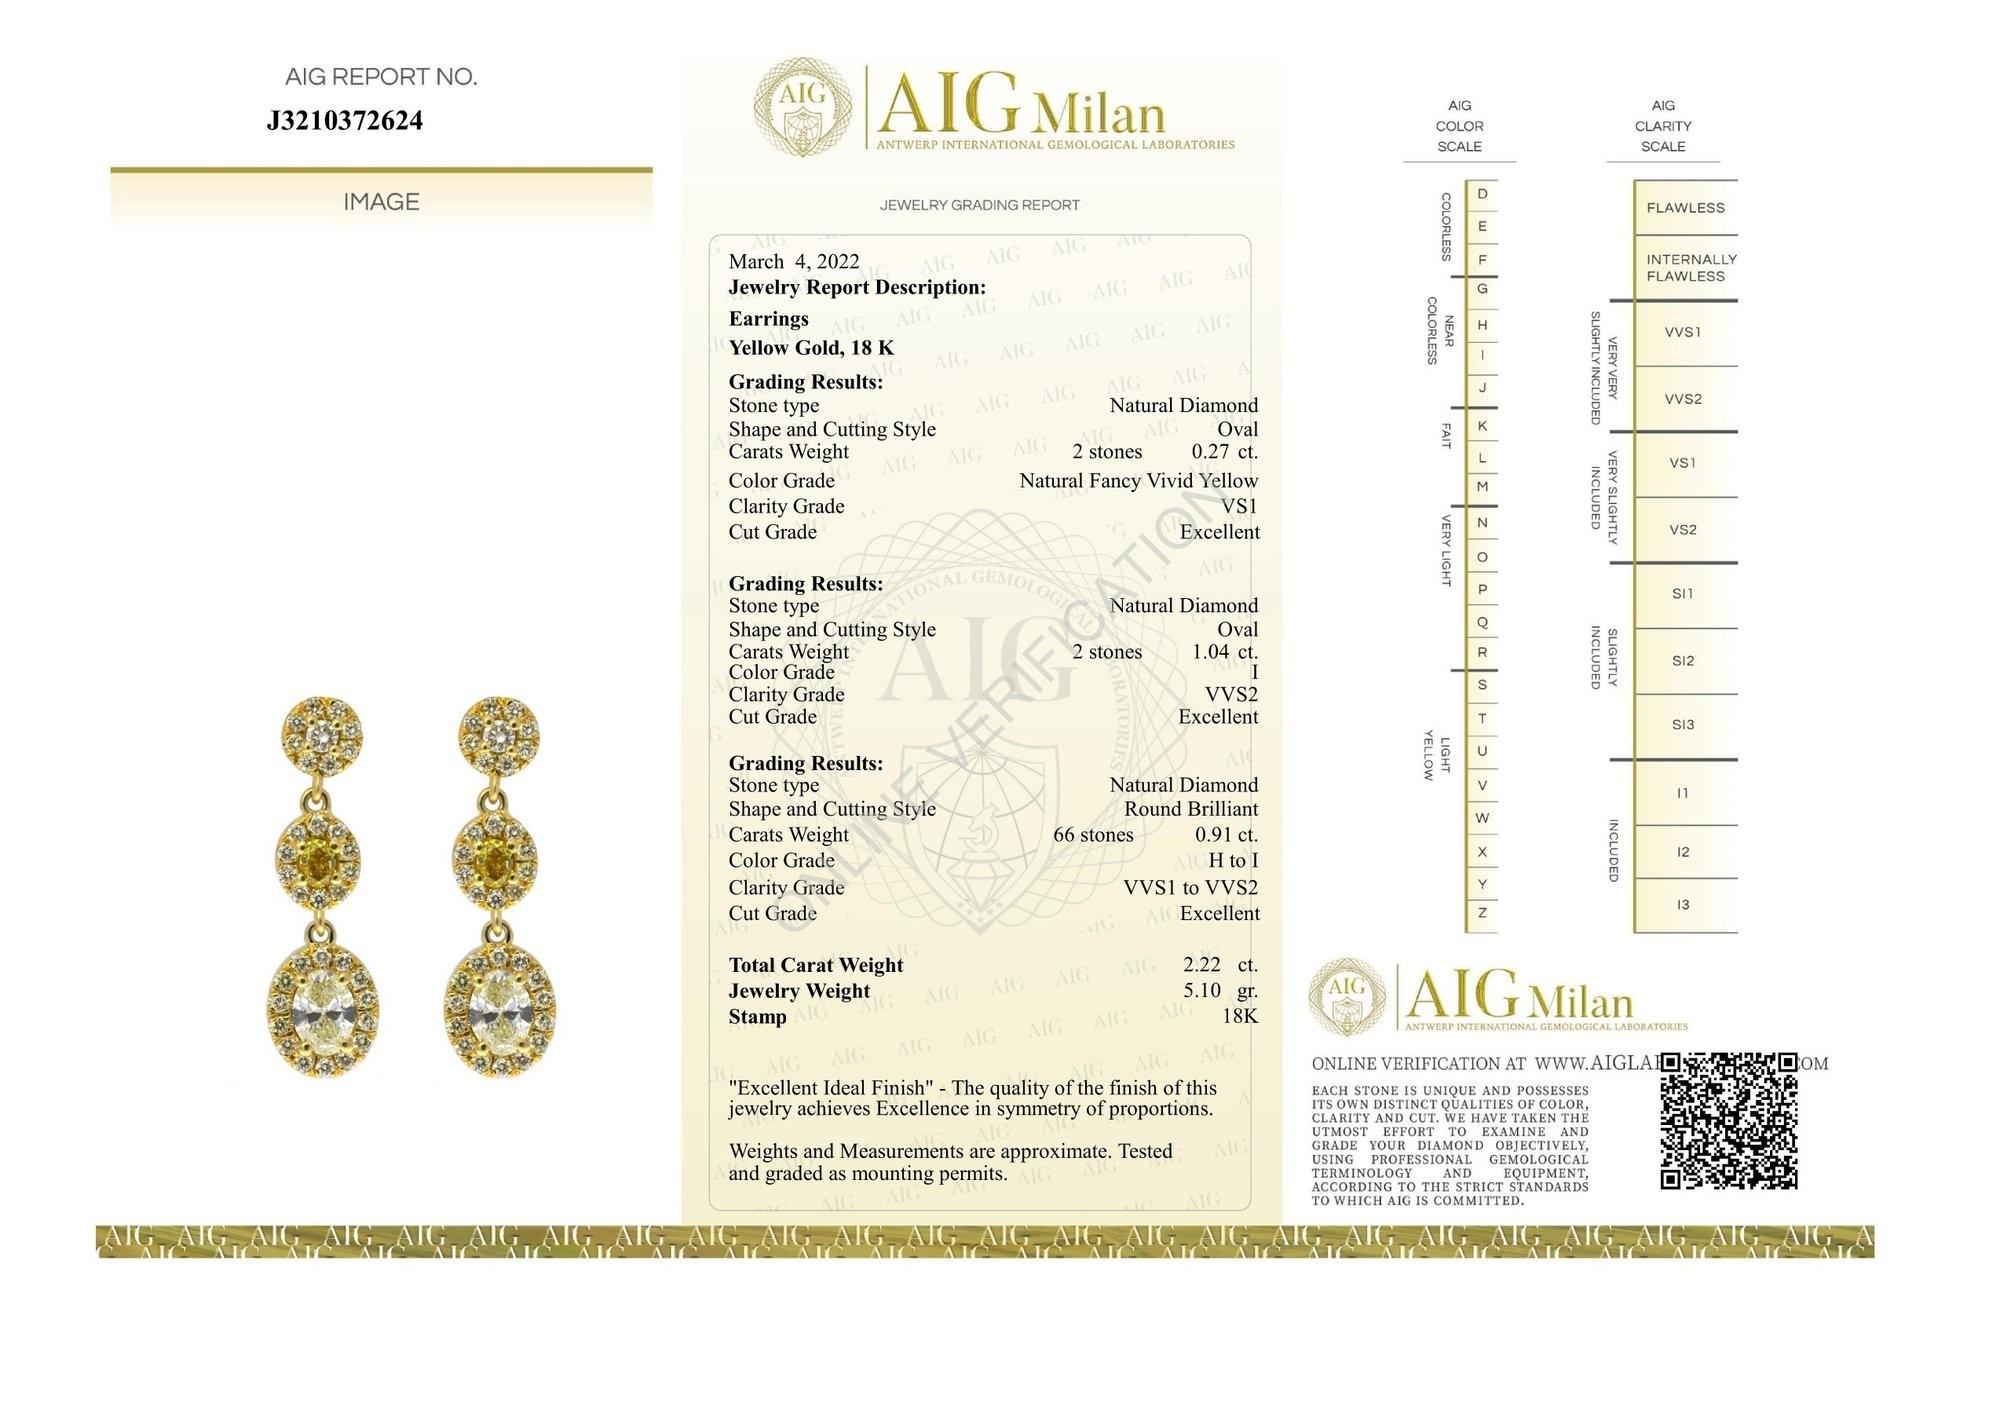 Beautiful 18K Yellow Gold Earrings with 2.22 carat Natural Diamonds- AIG Cert 1